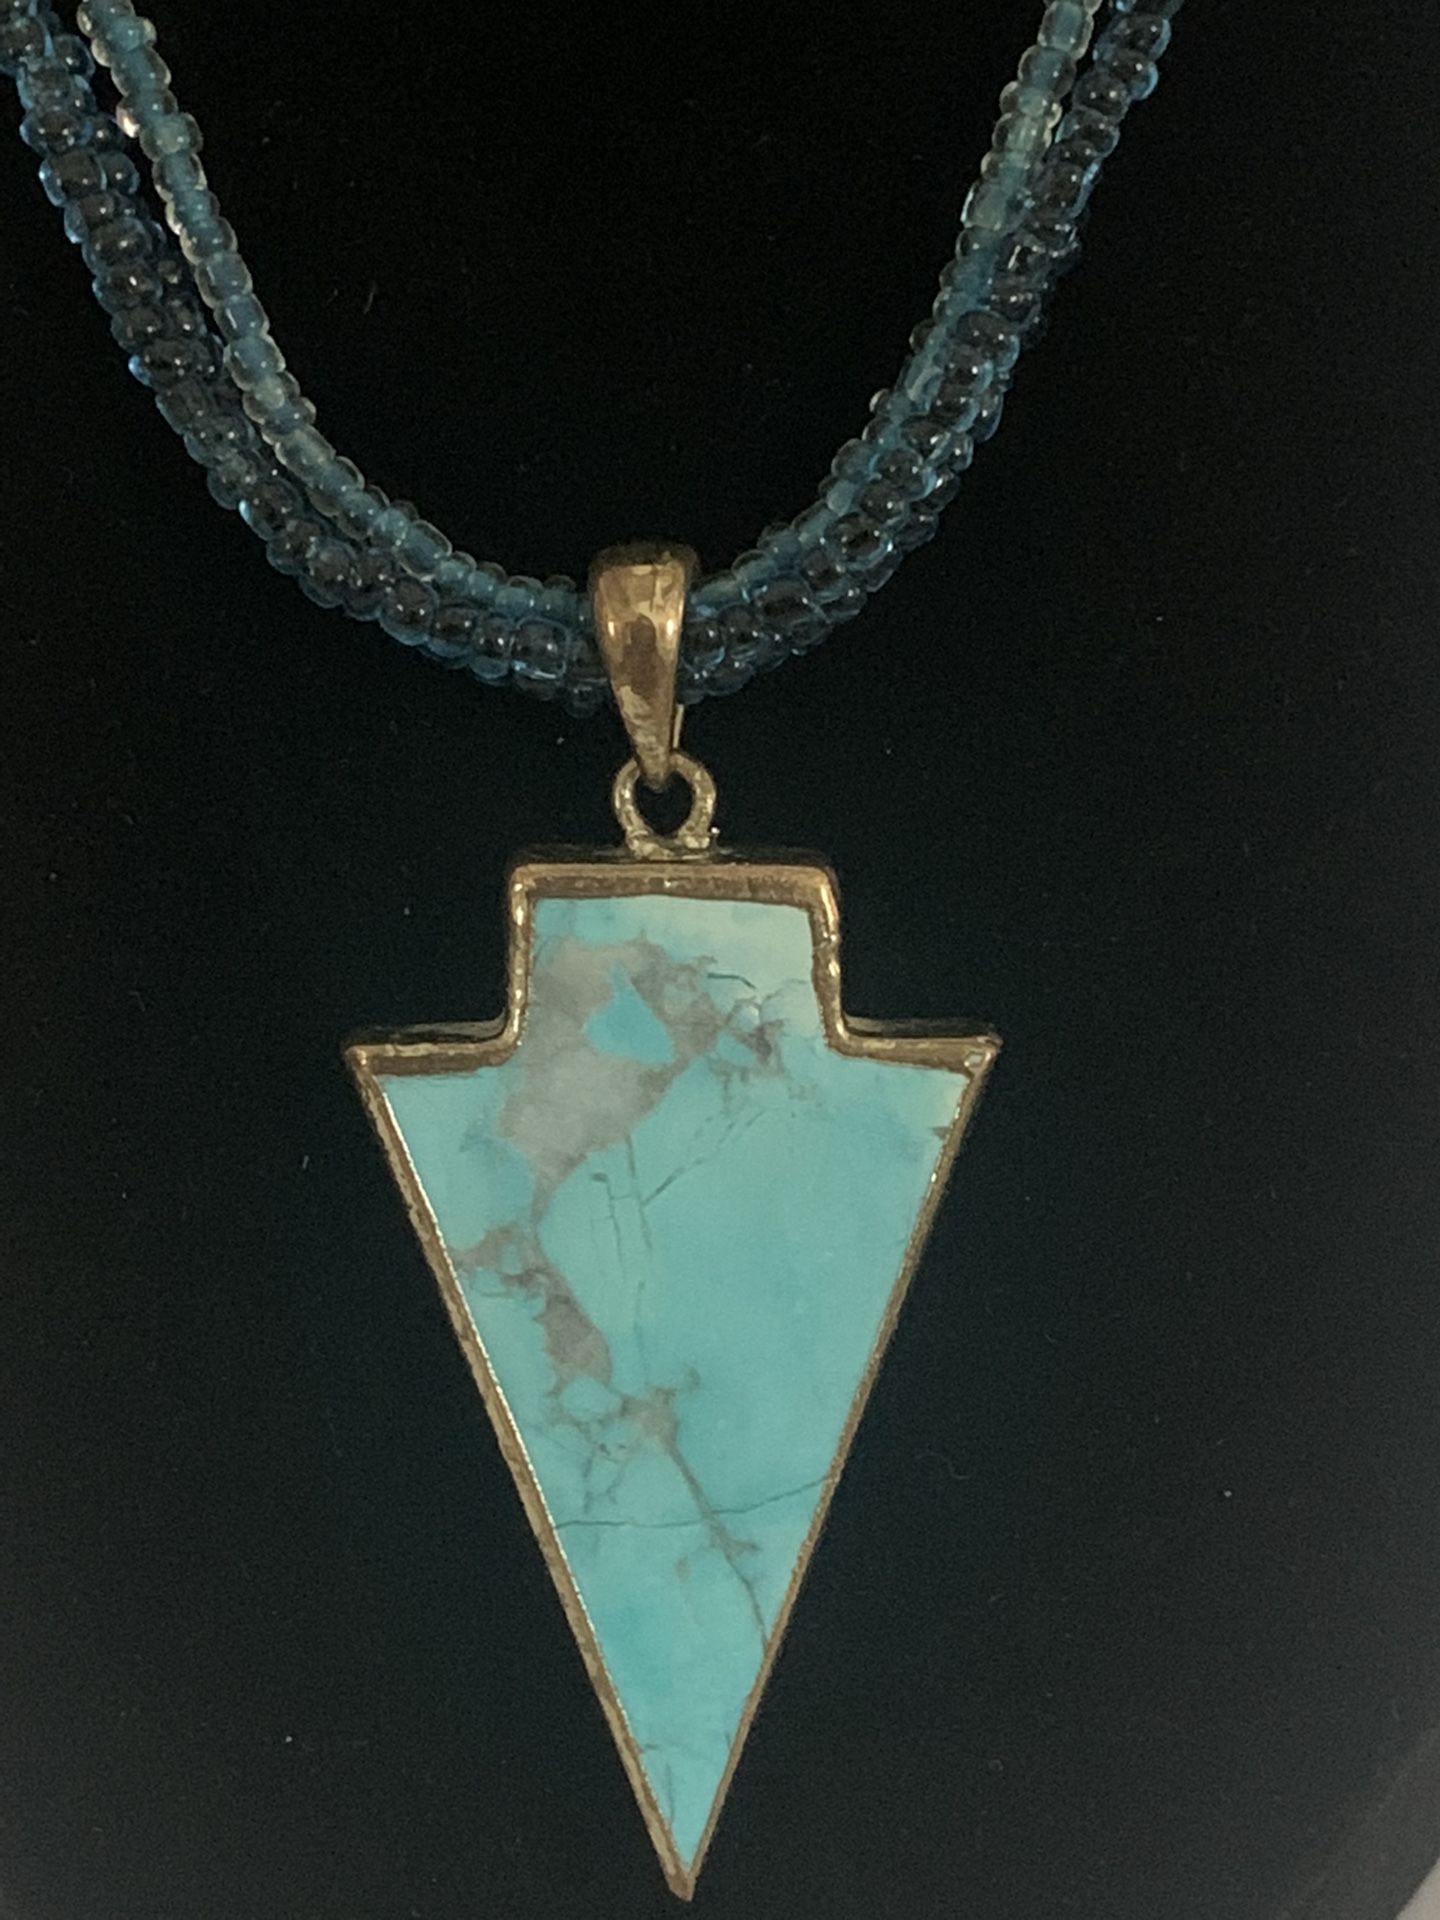 Turquoise Arrow Pendant Necklace 